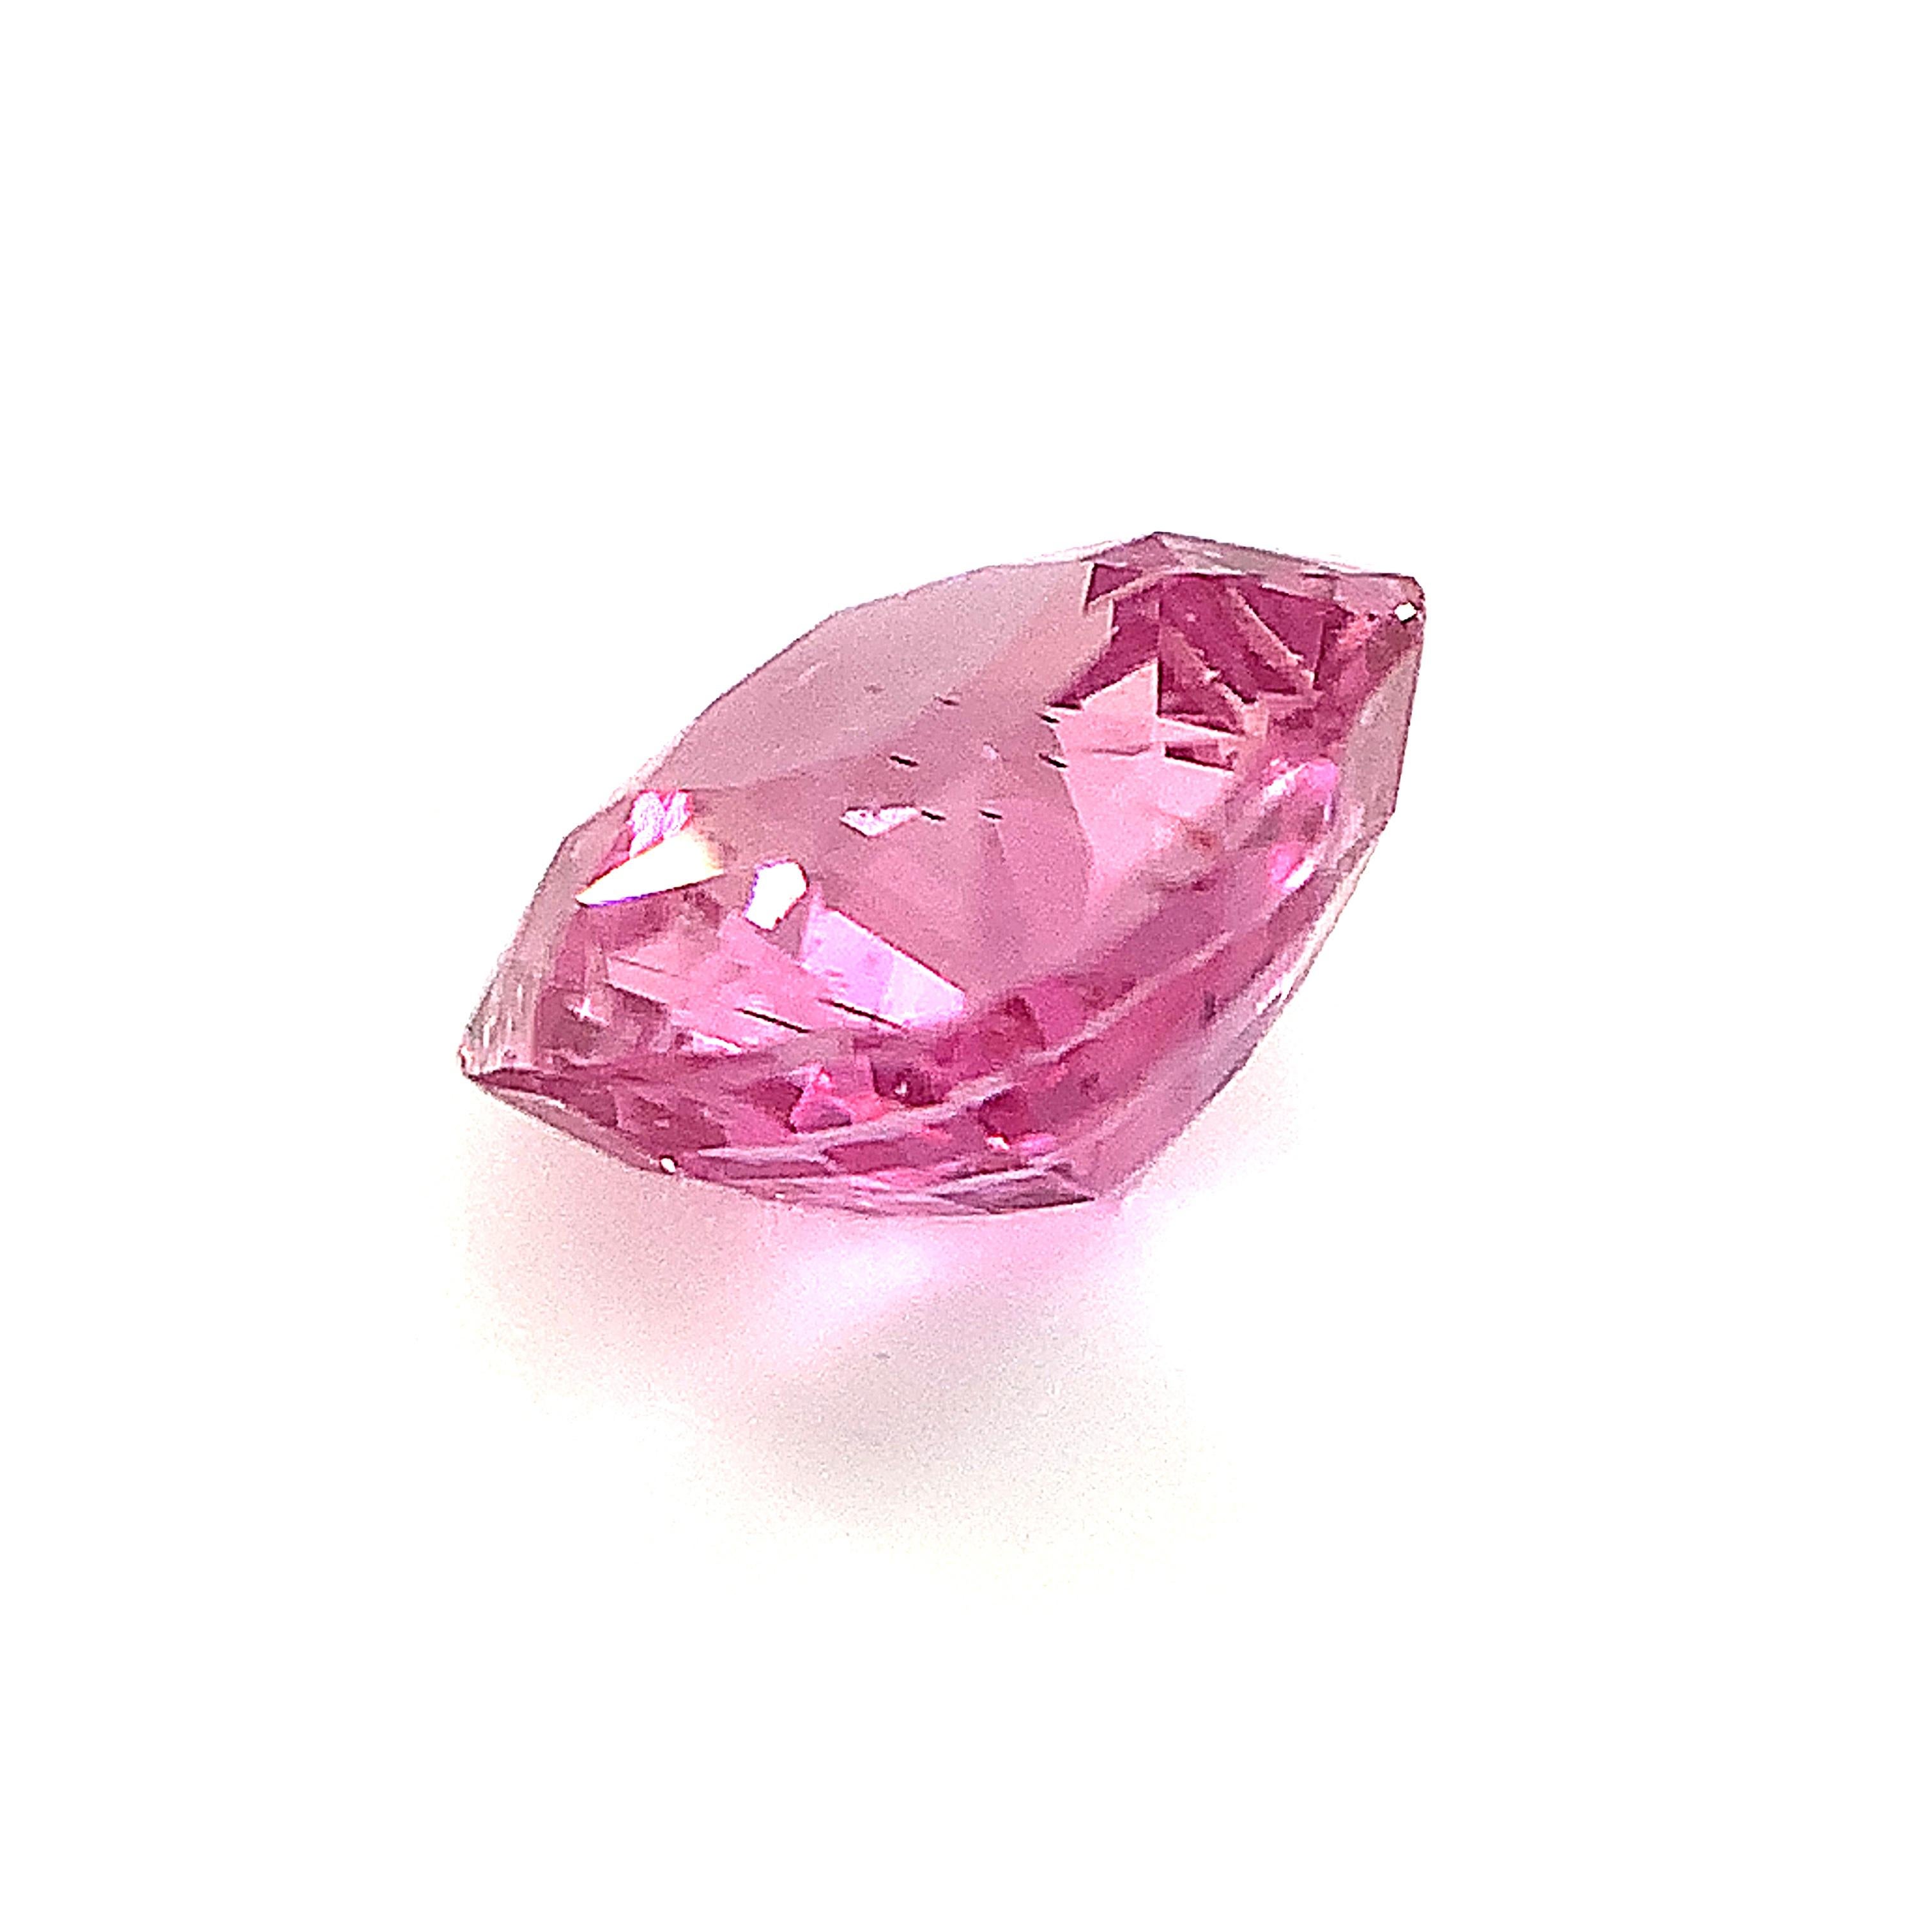 2.42 Carat Cushion Cut Pink Sapphire, Unset Loose Gemstone, GIA Certified 2